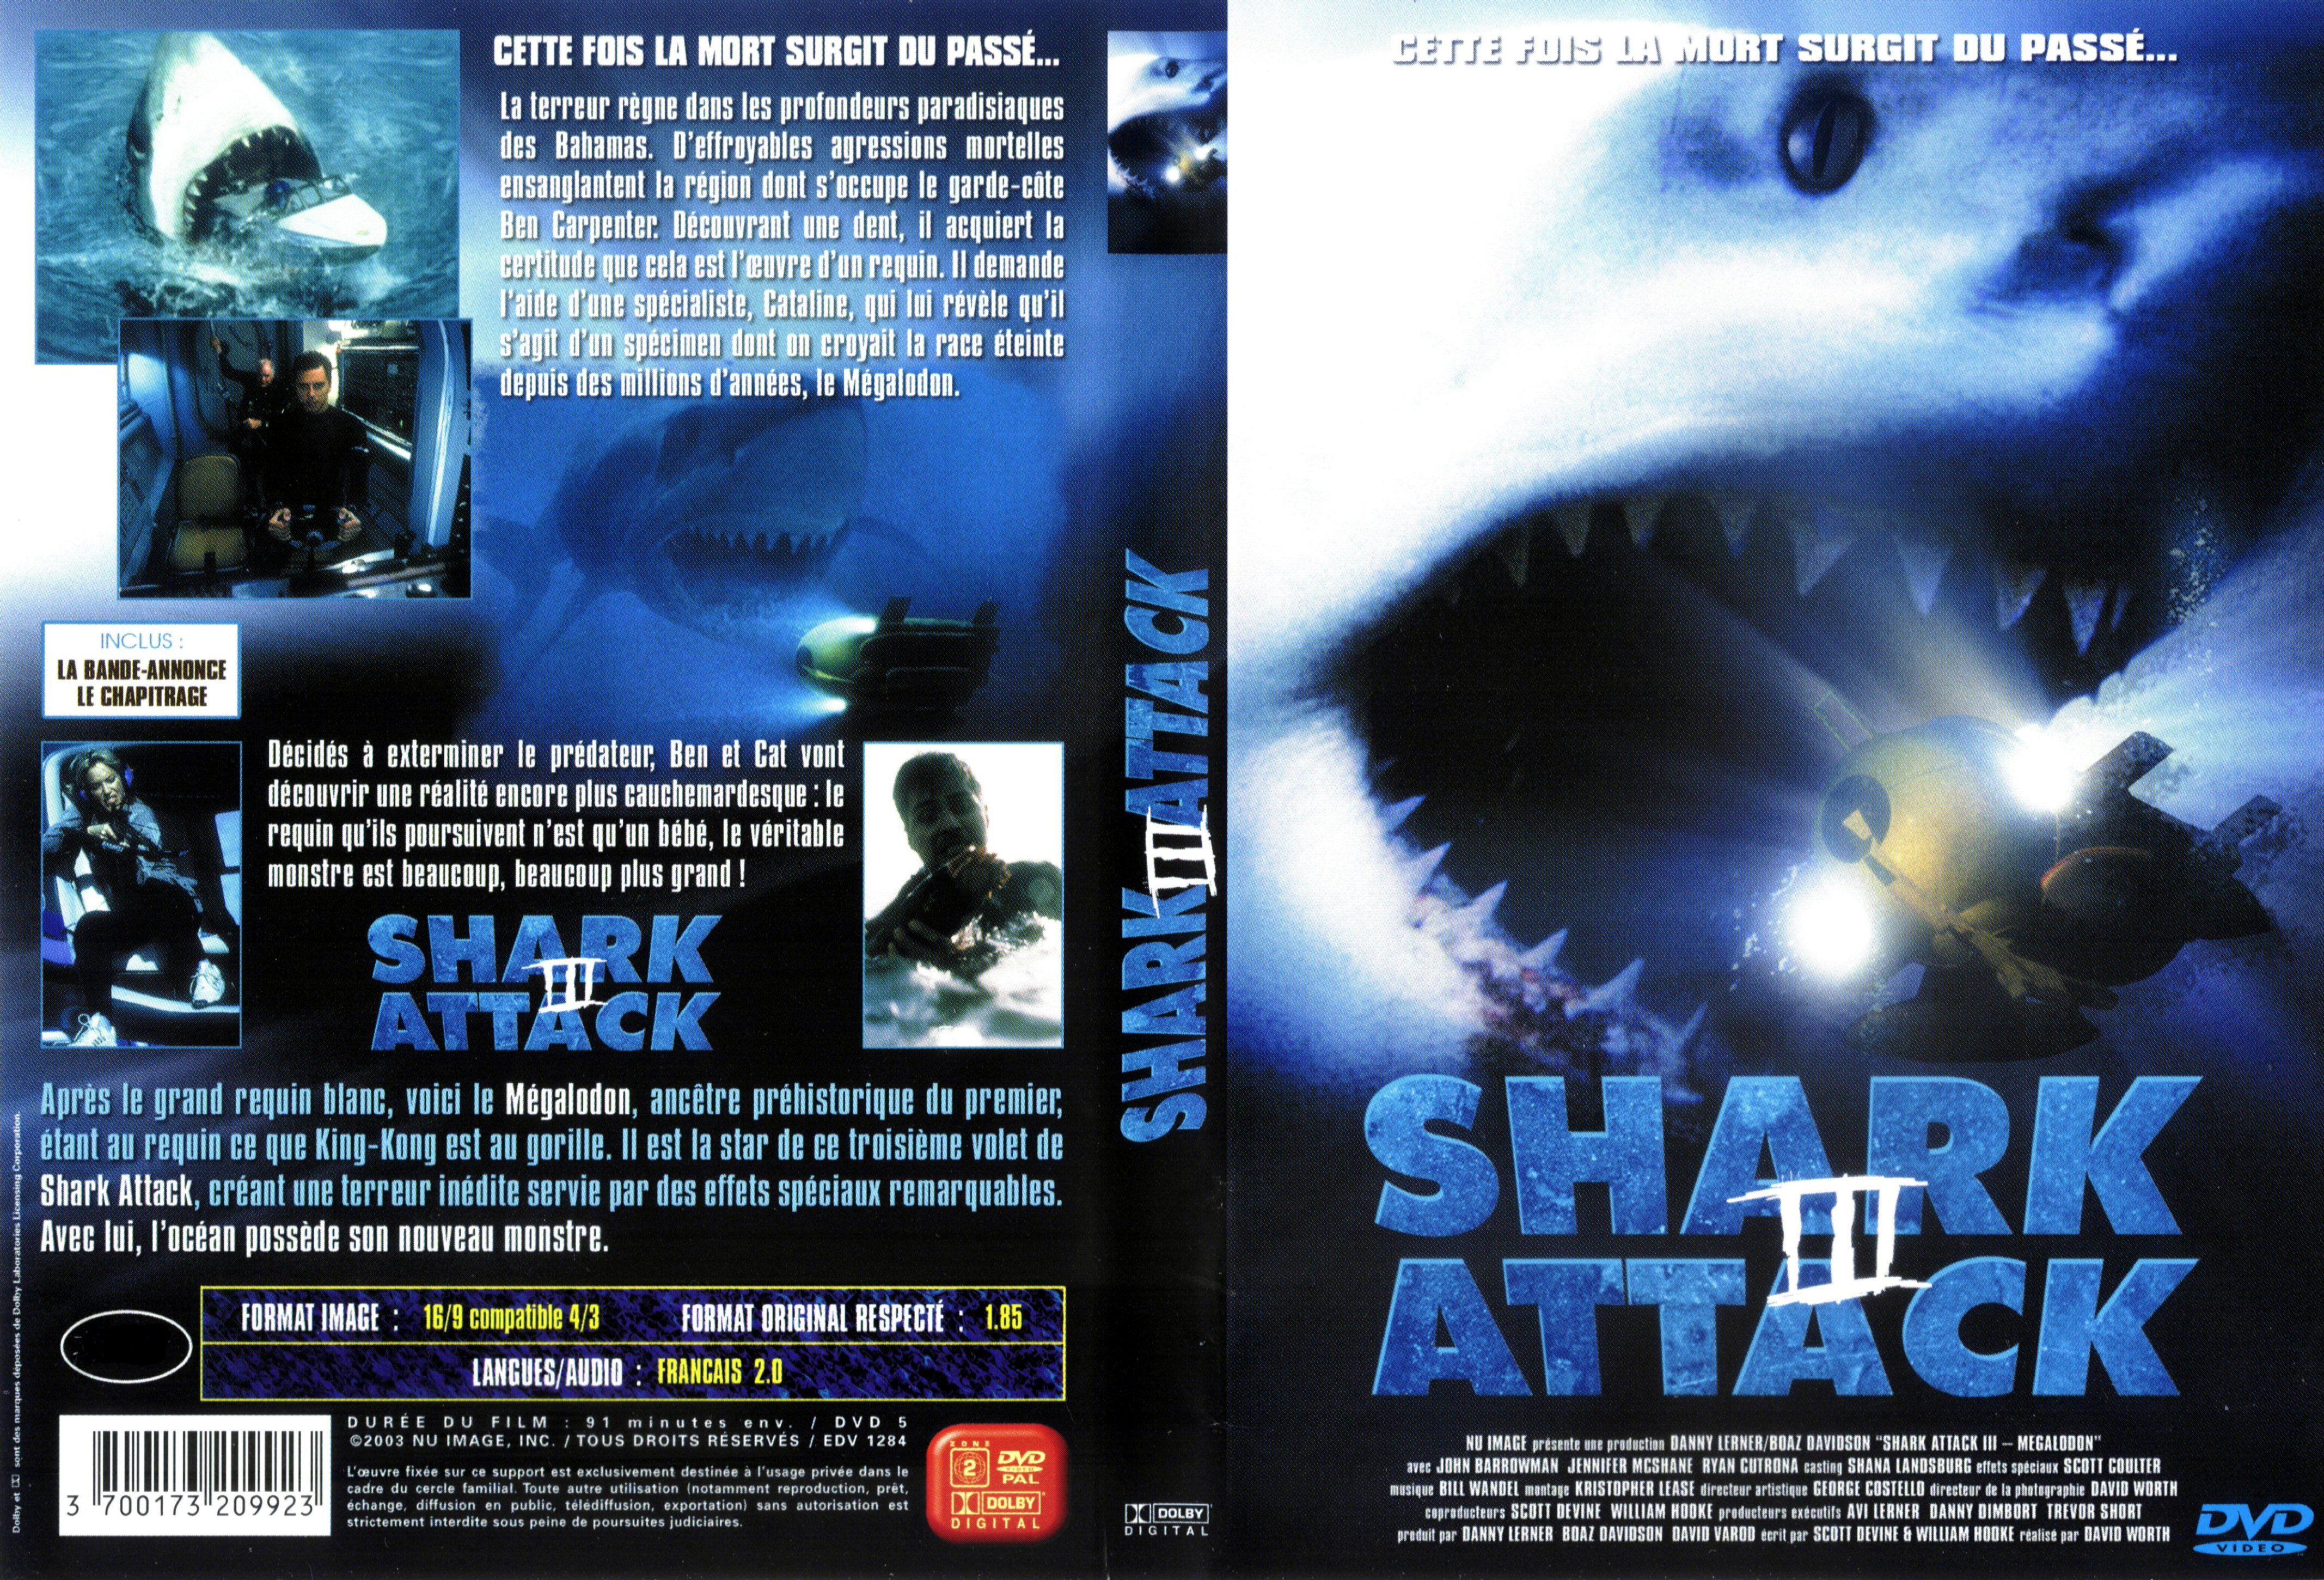 Jaquette DVD Shark attack 3